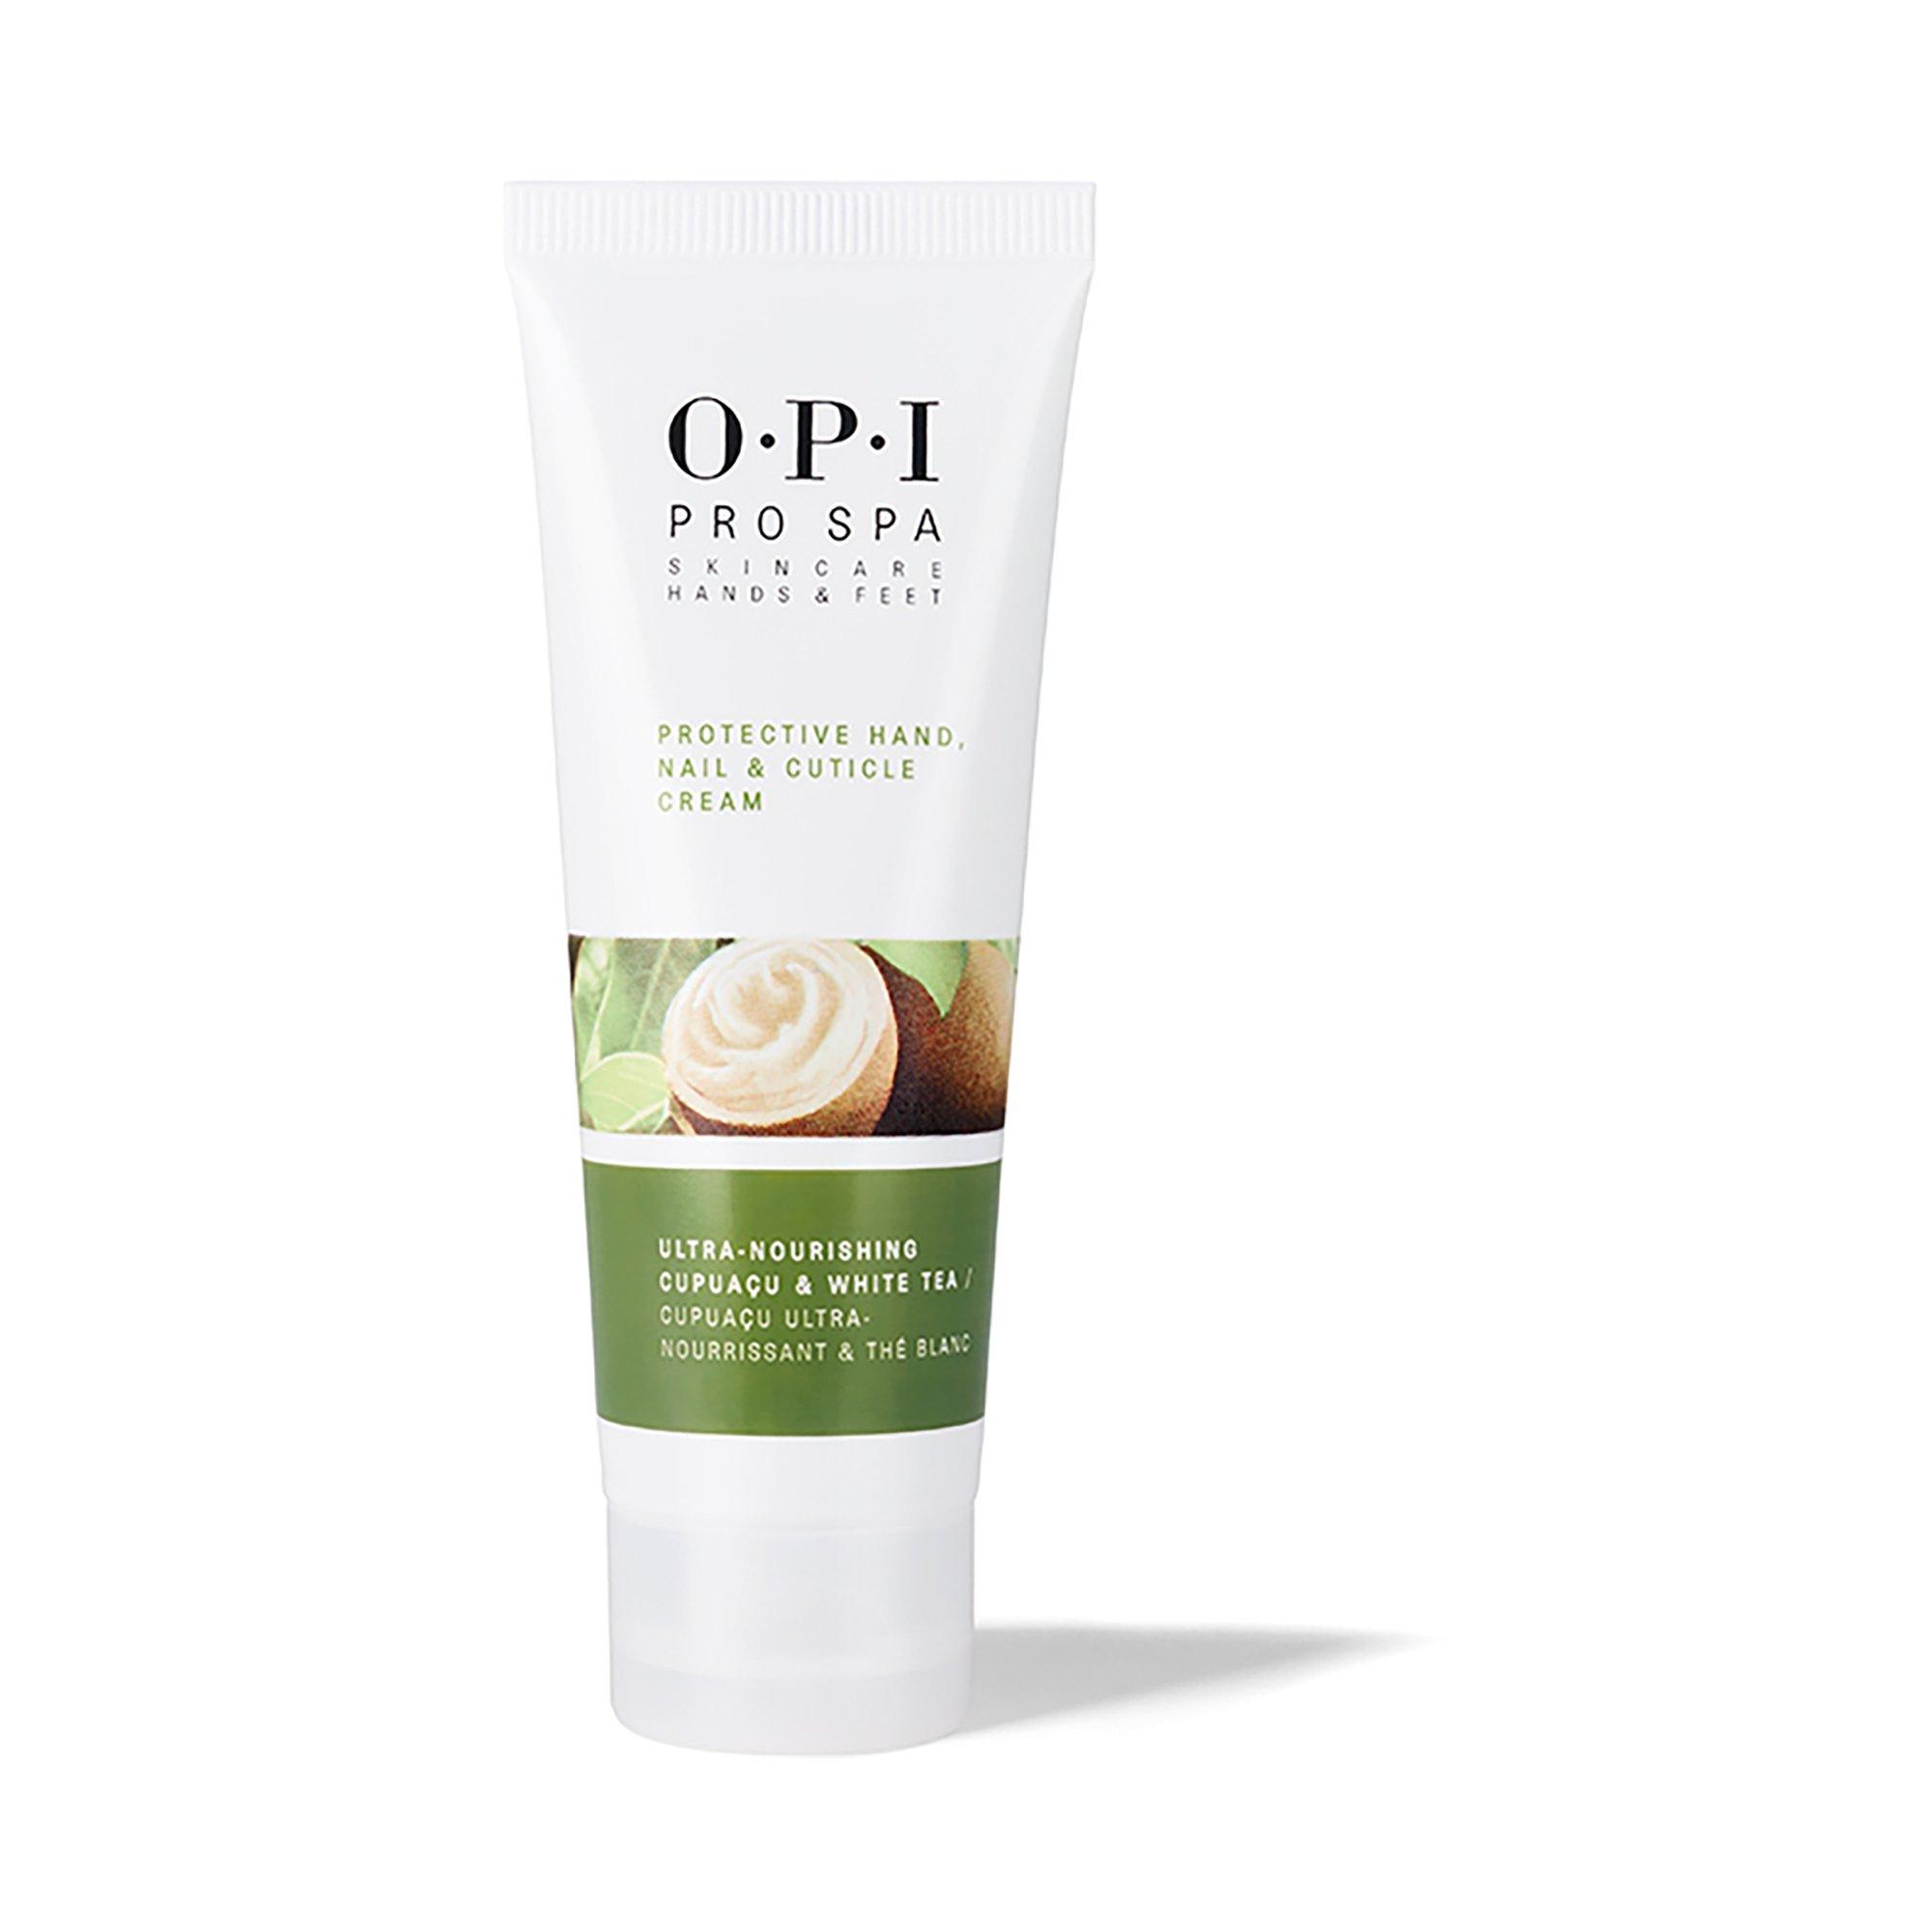 Image of OPI Handcrème ? ProSpa Protective Hand, Nail & Cuticle Cream - 50ml